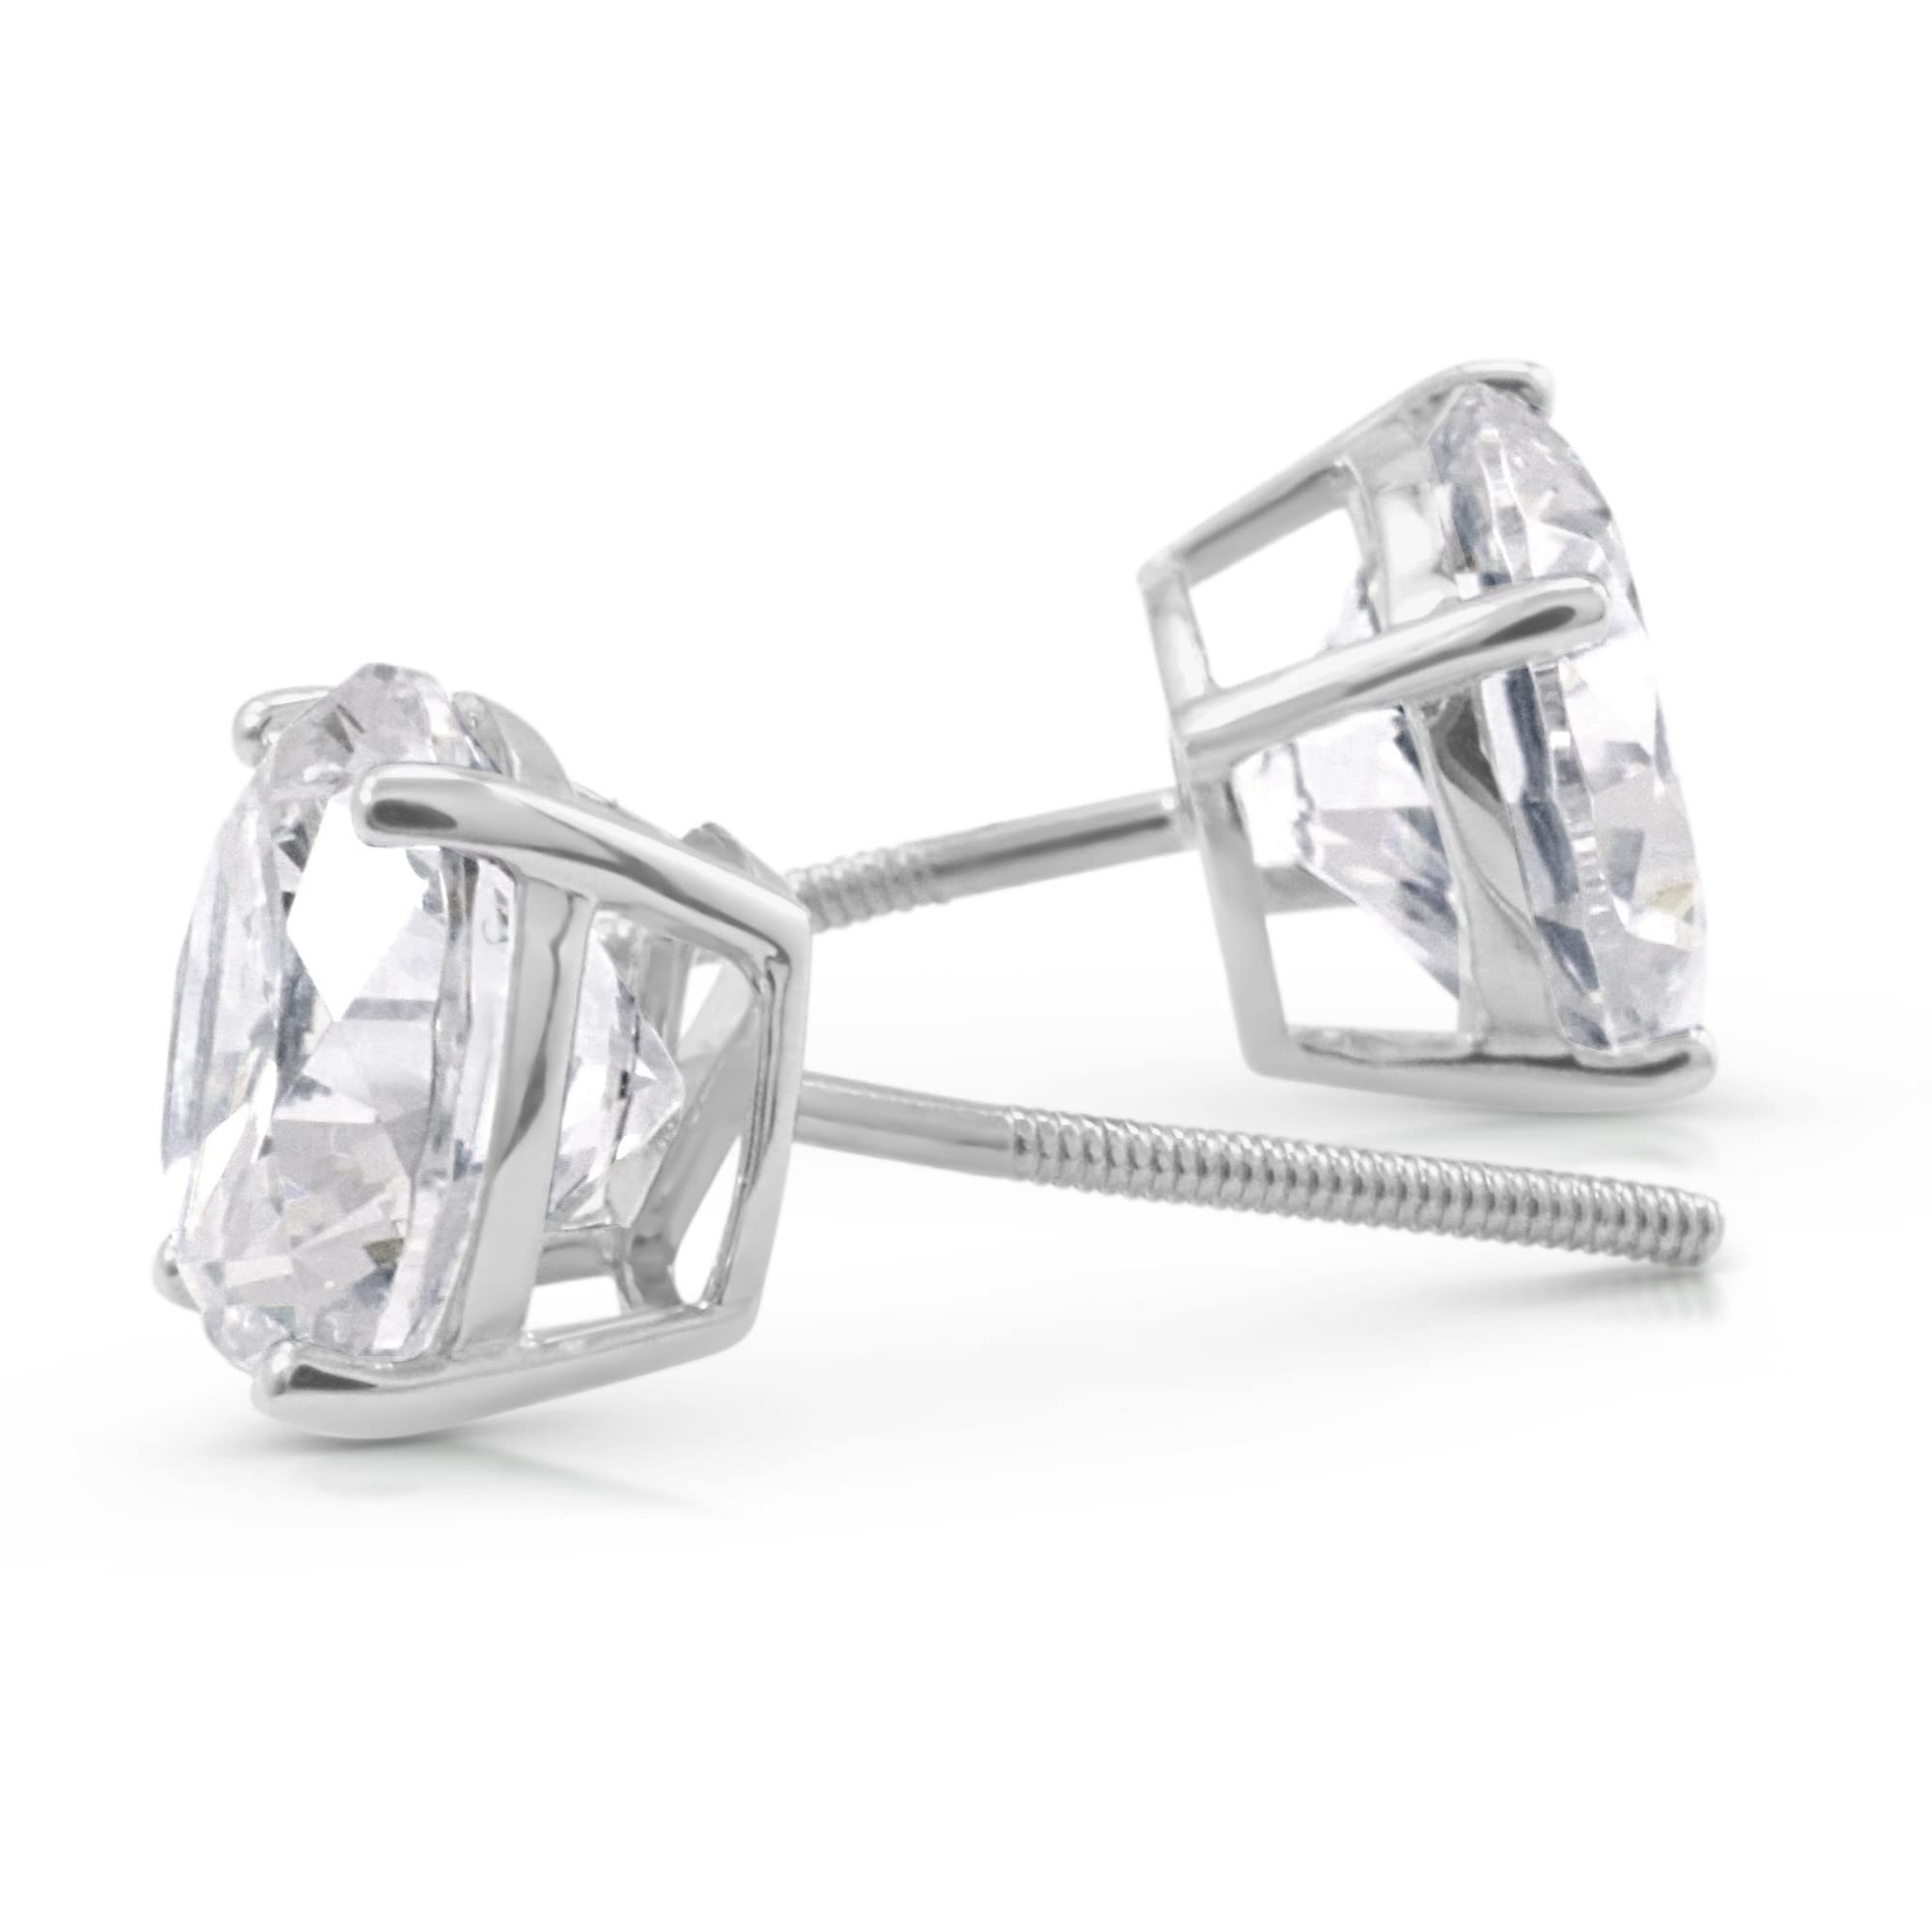 Diamond Earrings For Women, Diamond Stud Earrings For Men, 14k White Gold 1ct - 2ct Princess, Heart, Round Cut Screw Back Earrings VVS1 D-E Color[Simulated Diamond] - Fox Jewelry Co